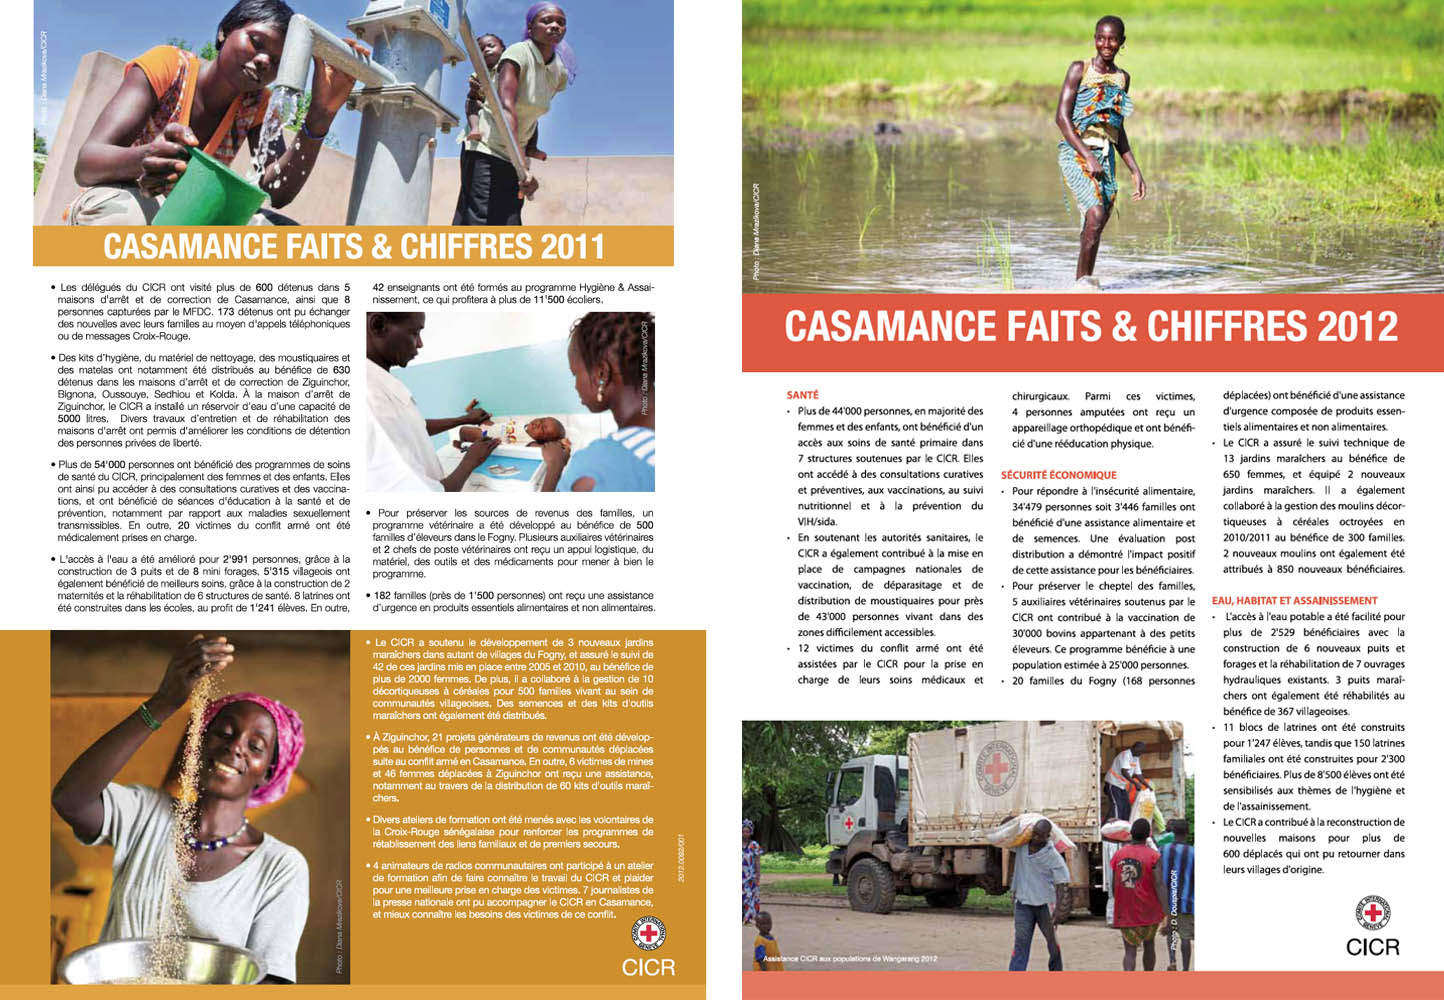 Casamance facts brochure 2011, 2012